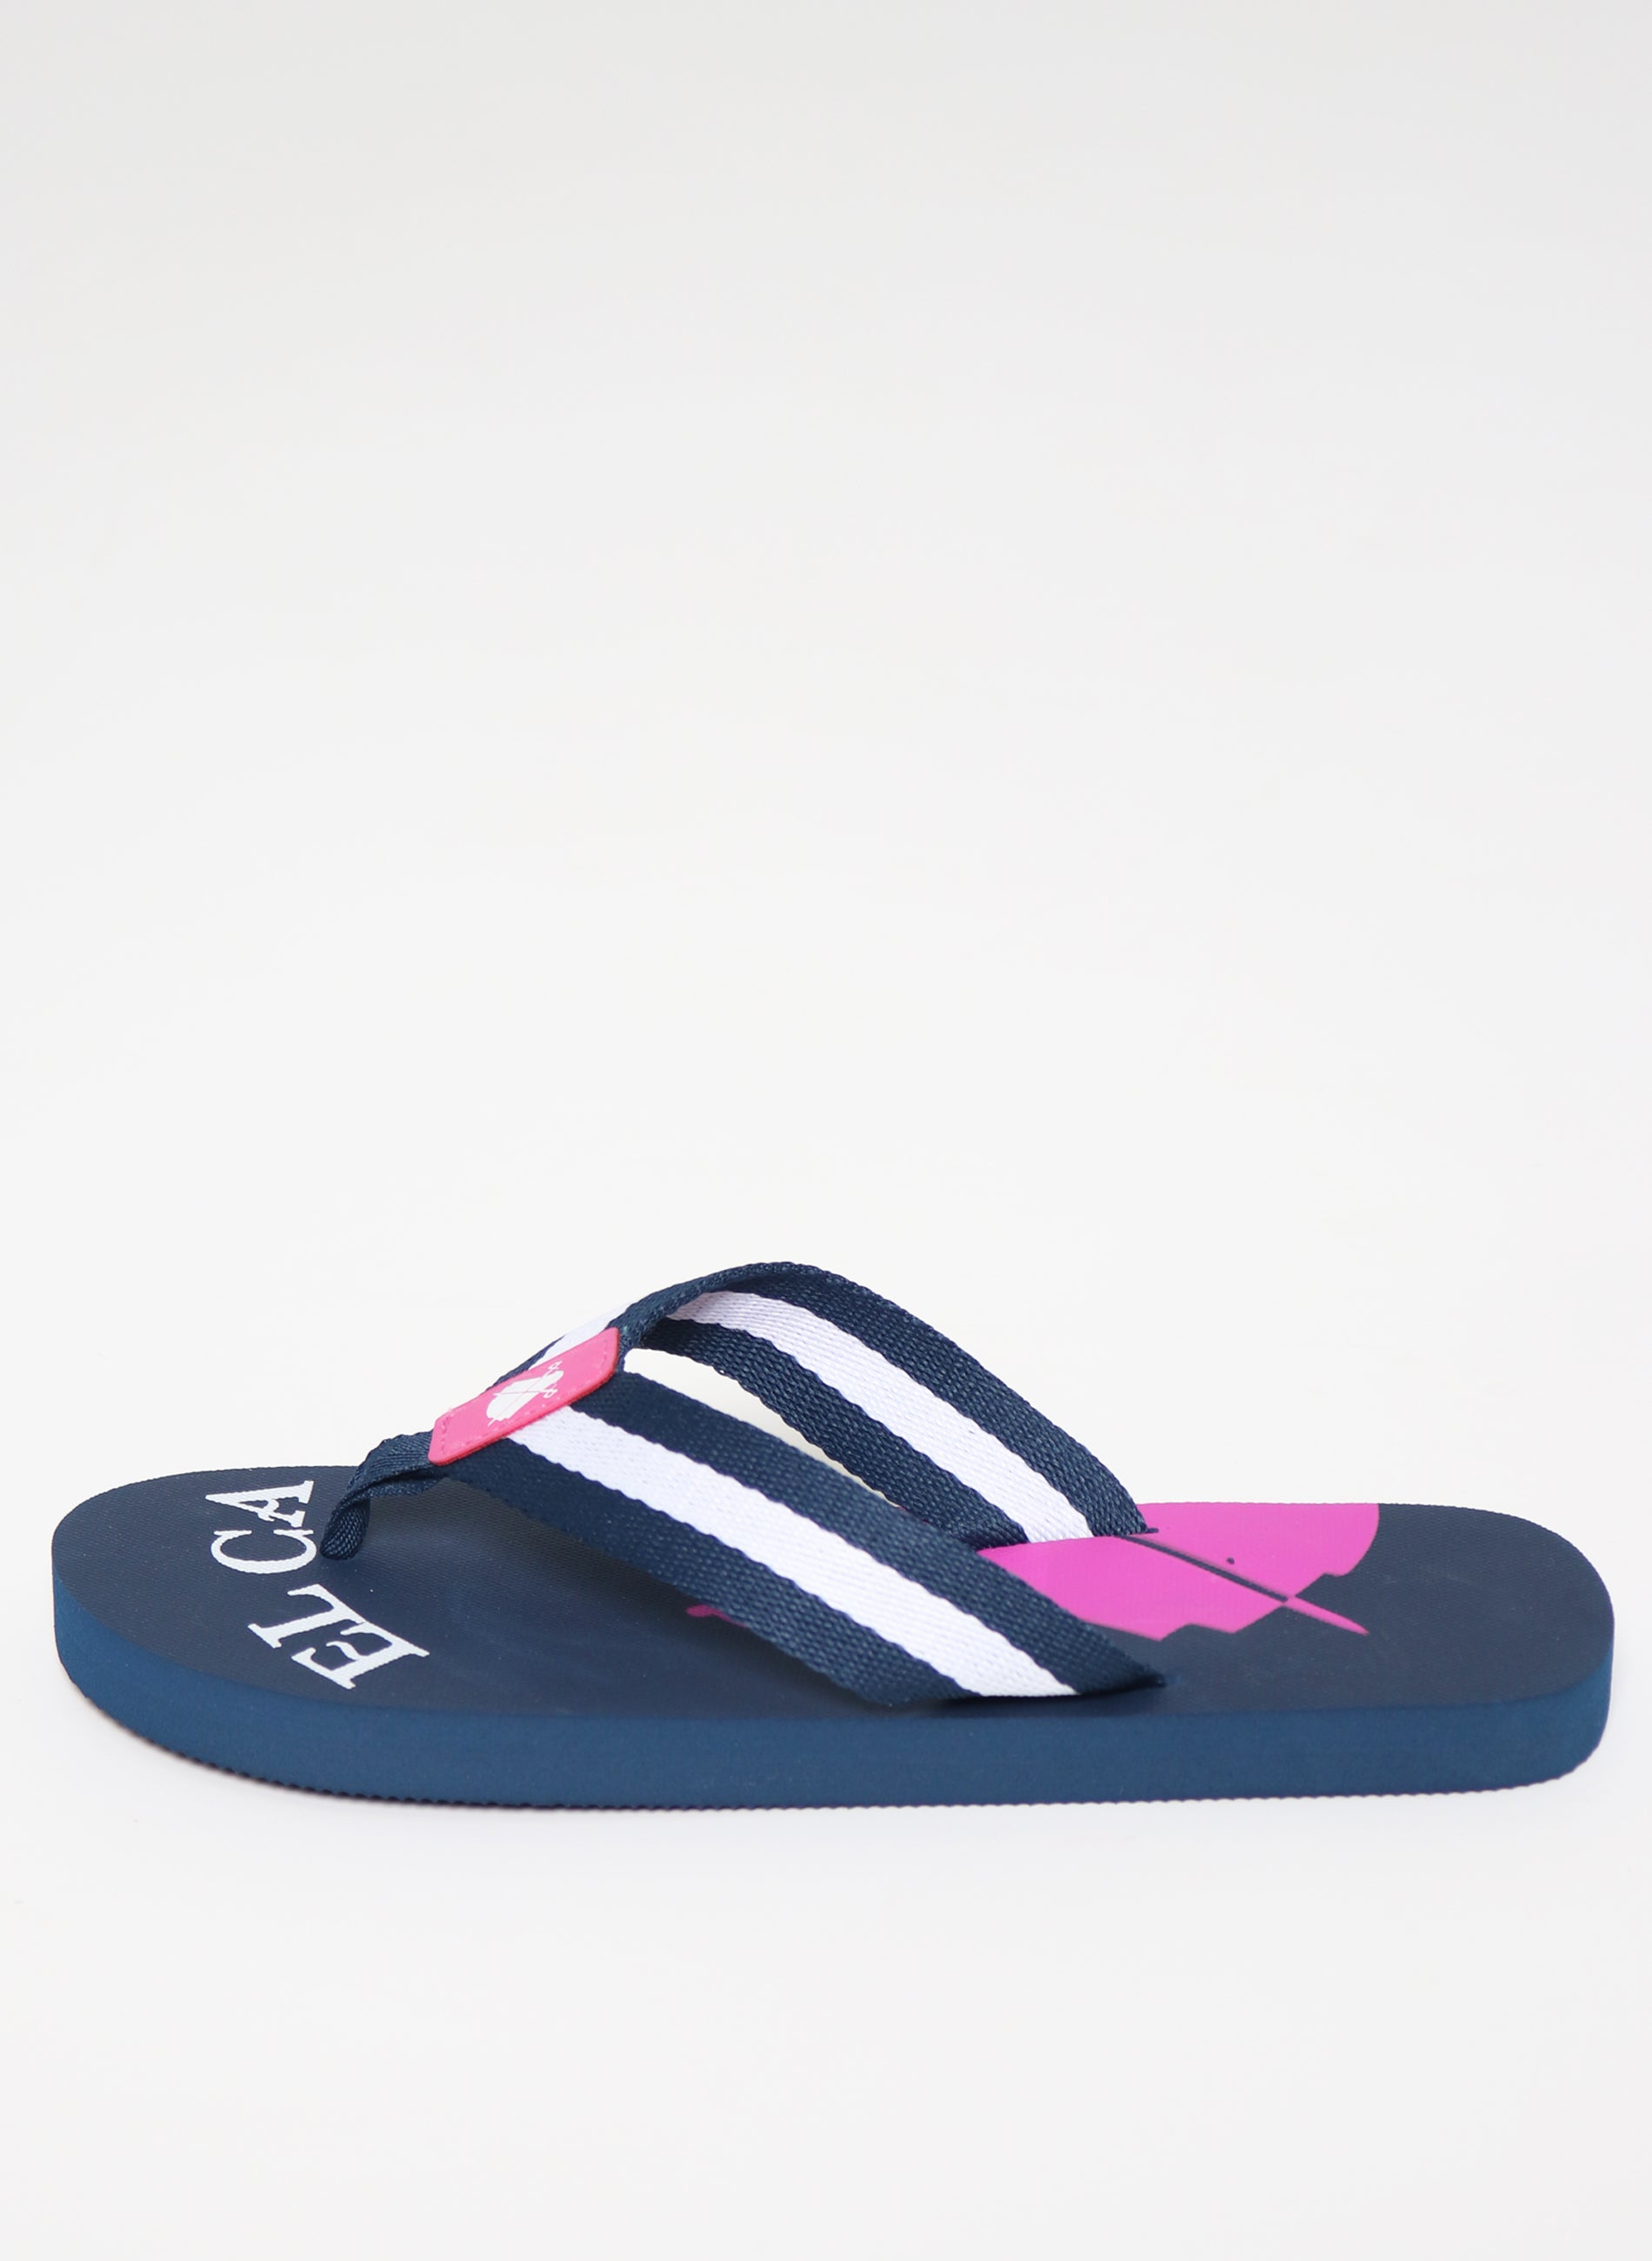 Flip Flops Unisex Blue Pink